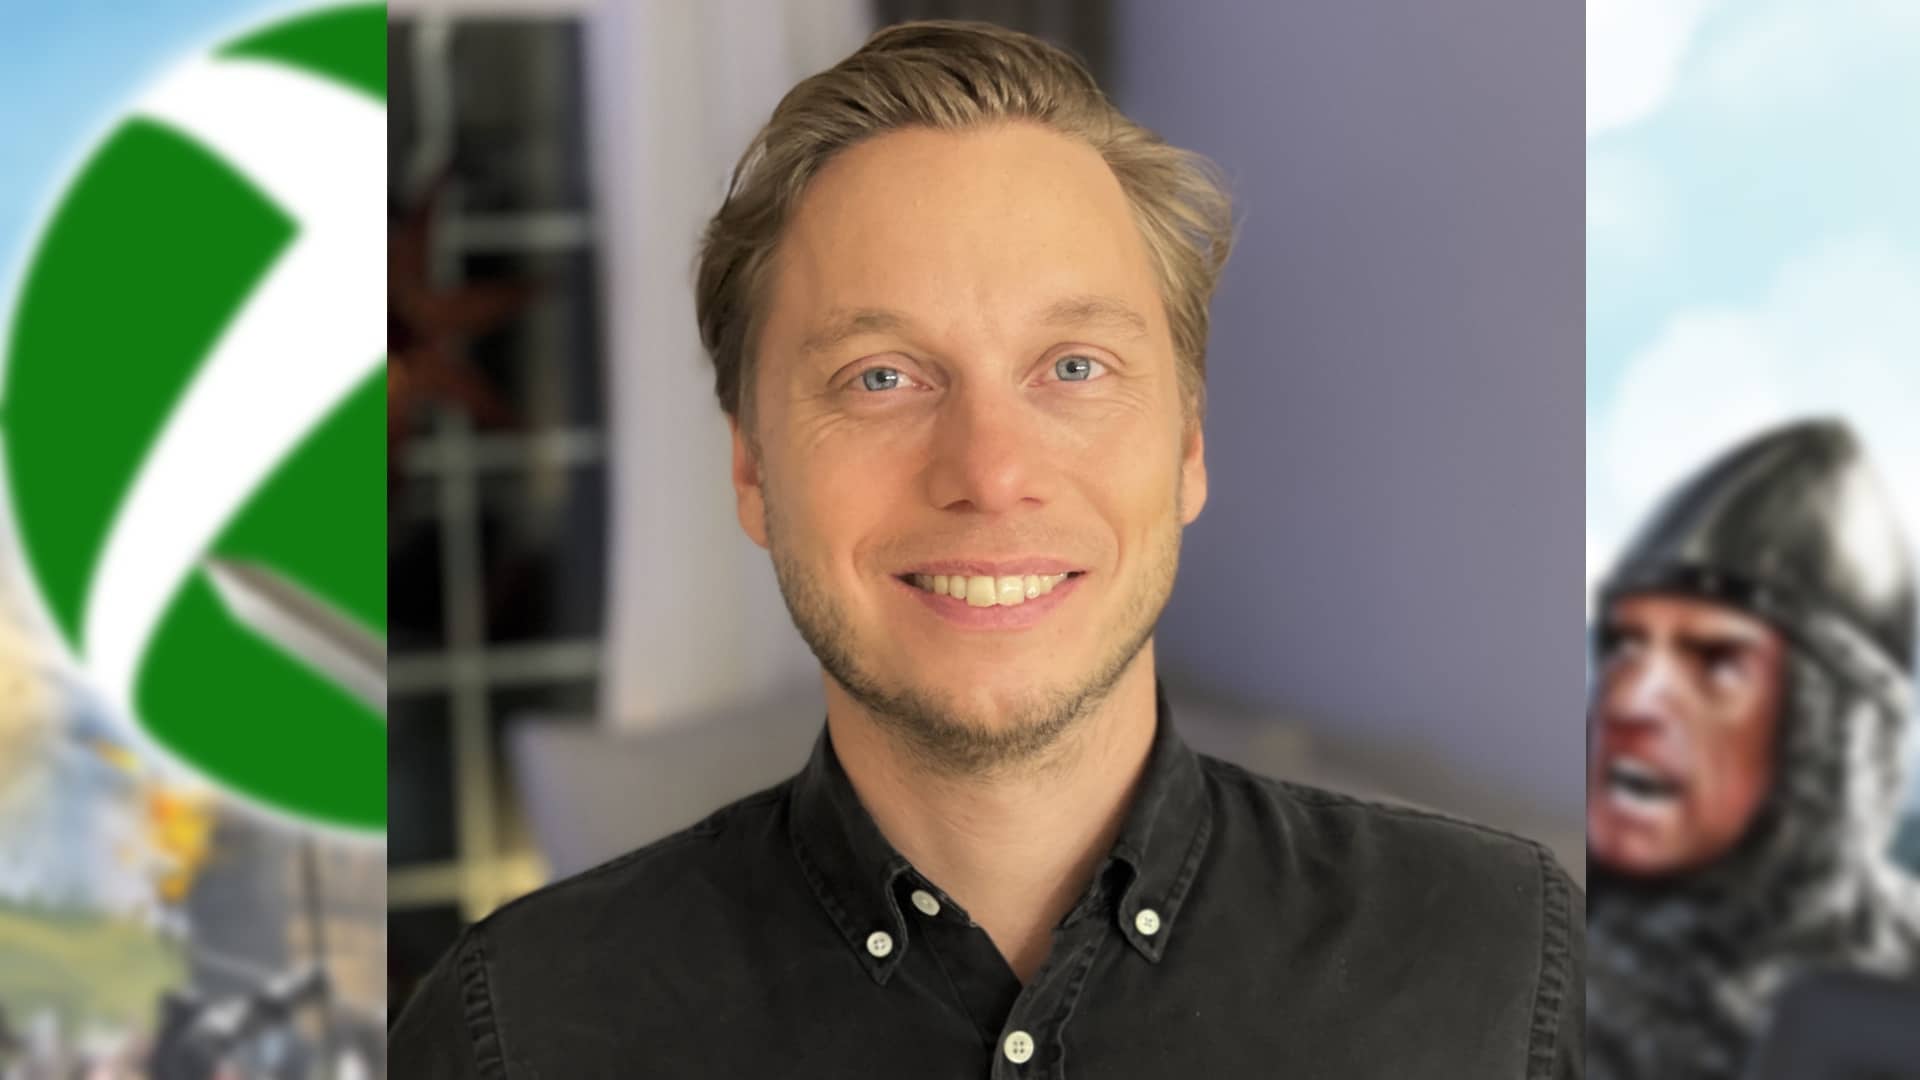 Йохан Болин - директор по маркетингу в Paradox Interactive.